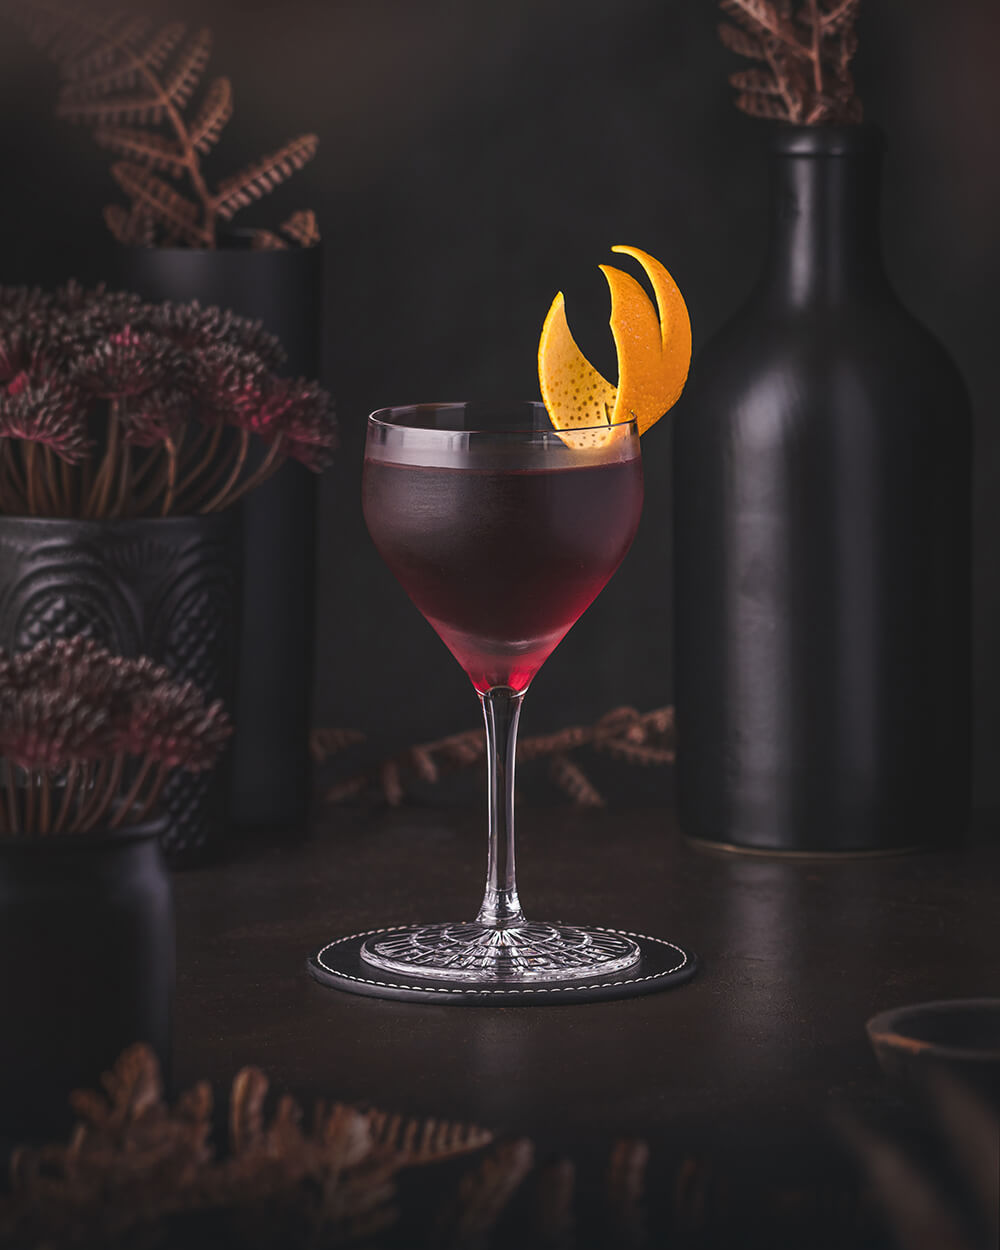 Hanky Panky Cocktail – Martinez with Fernet Branca